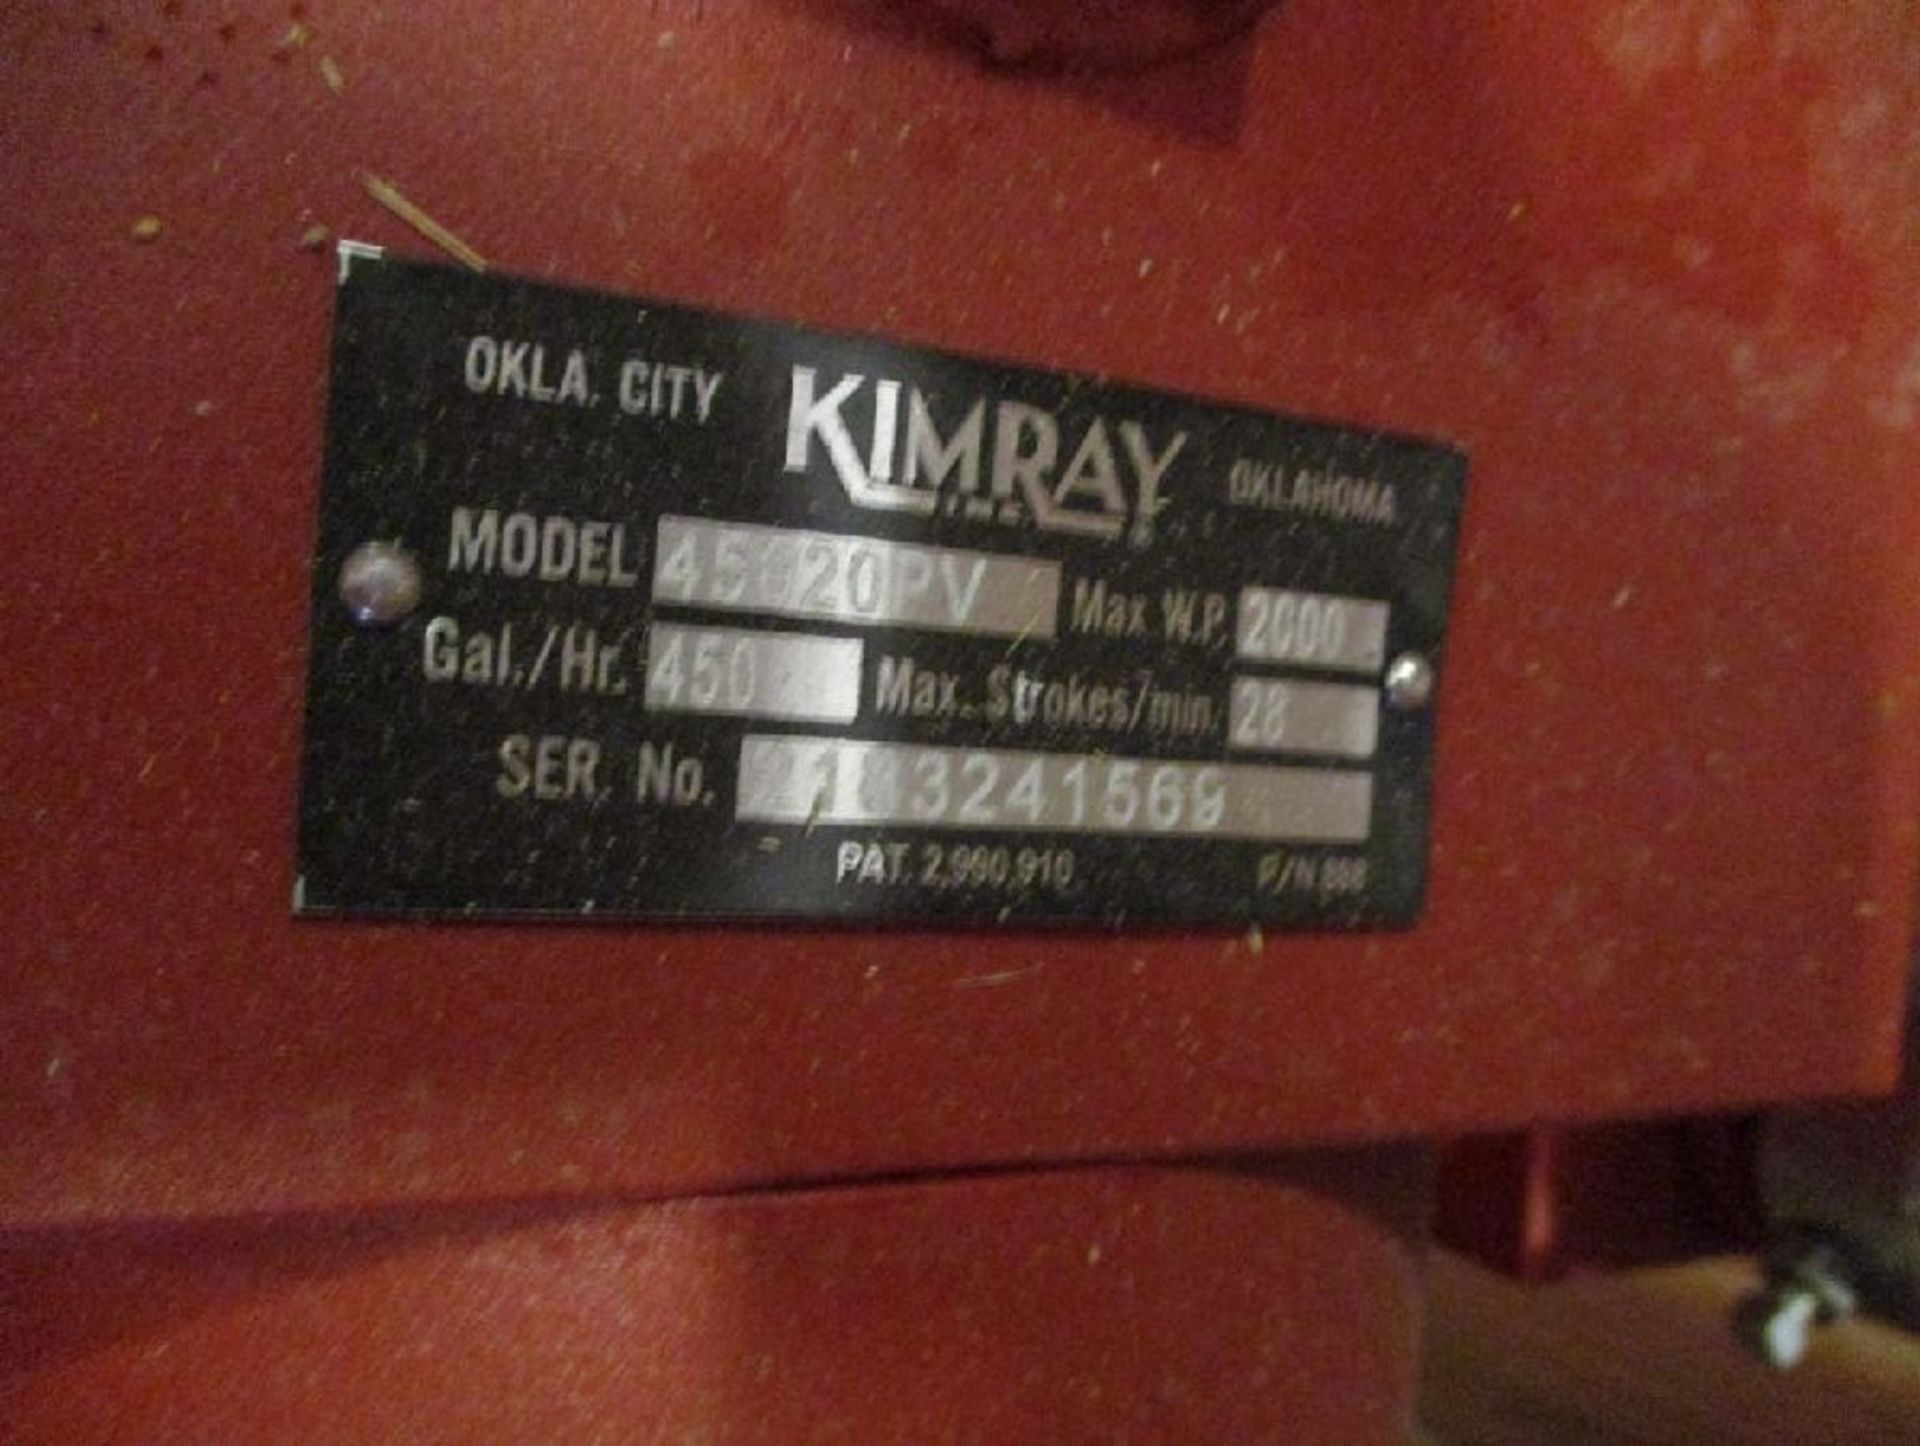 Model Kimray #GAJHSN 45020PV Unused Glycol Pumps - Image 5 of 6